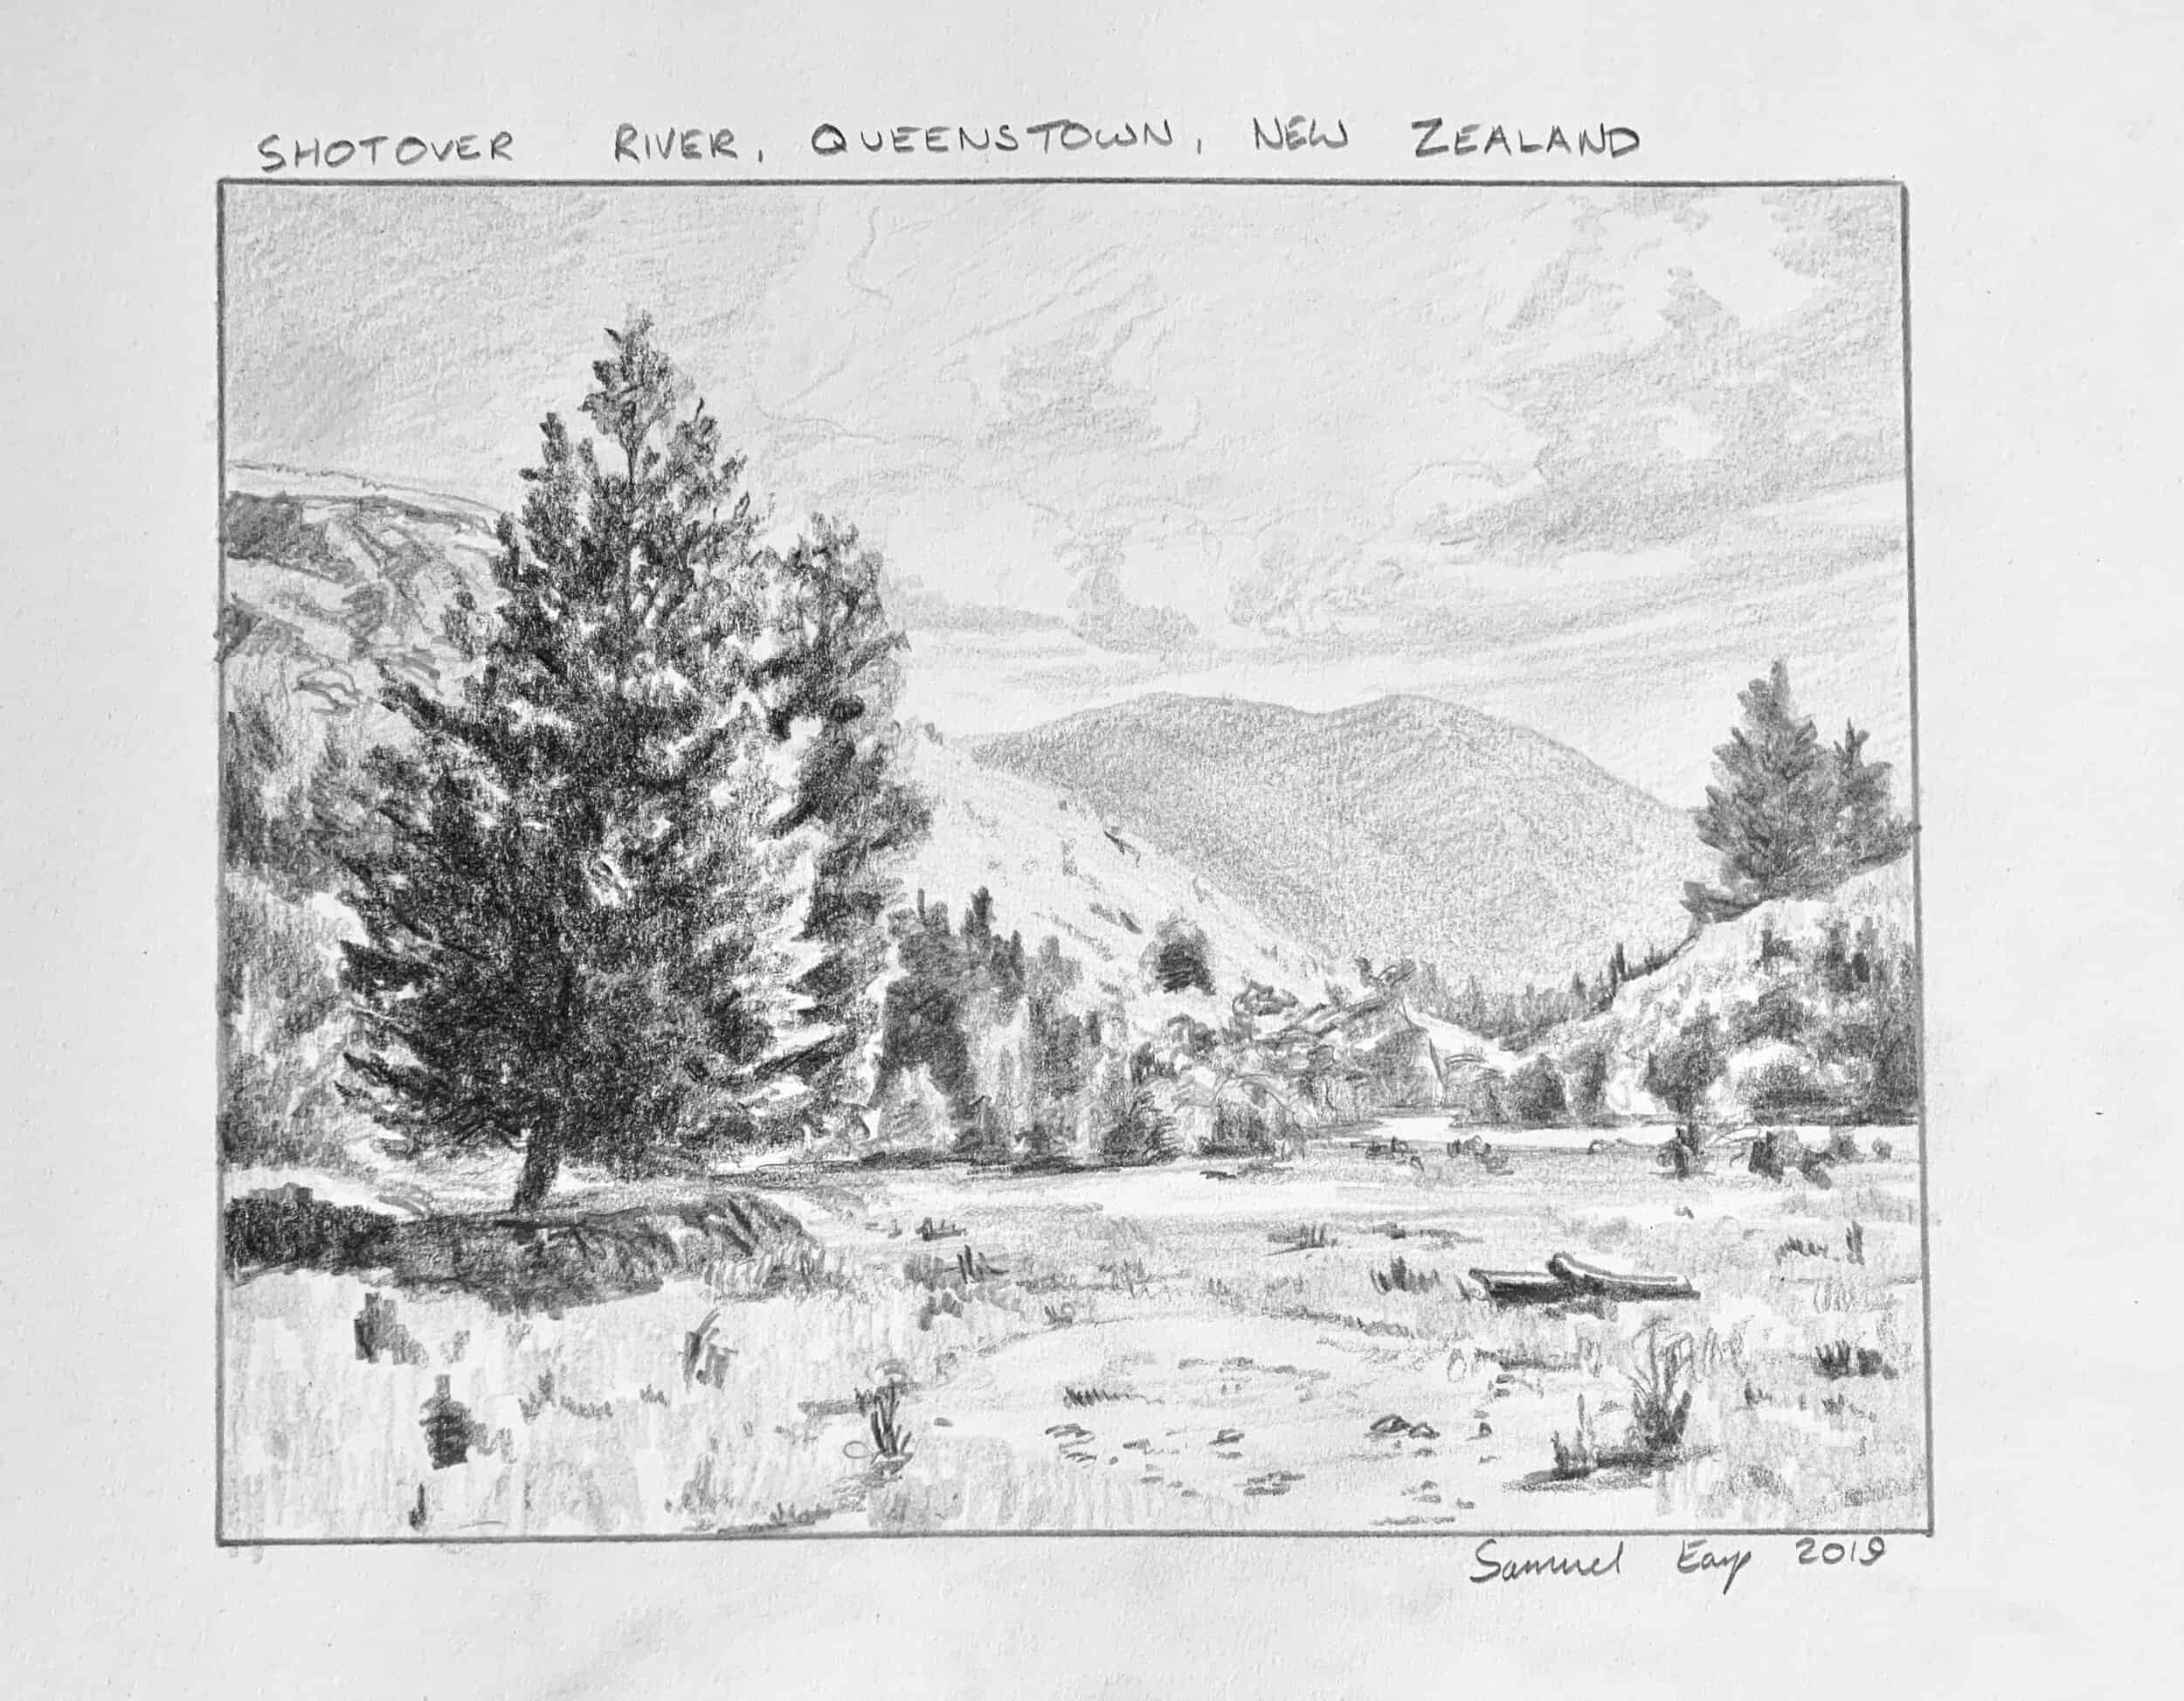 Shotover River - Queenstown - New Zealand - pencil drawing - Samuel Earp.jpeg